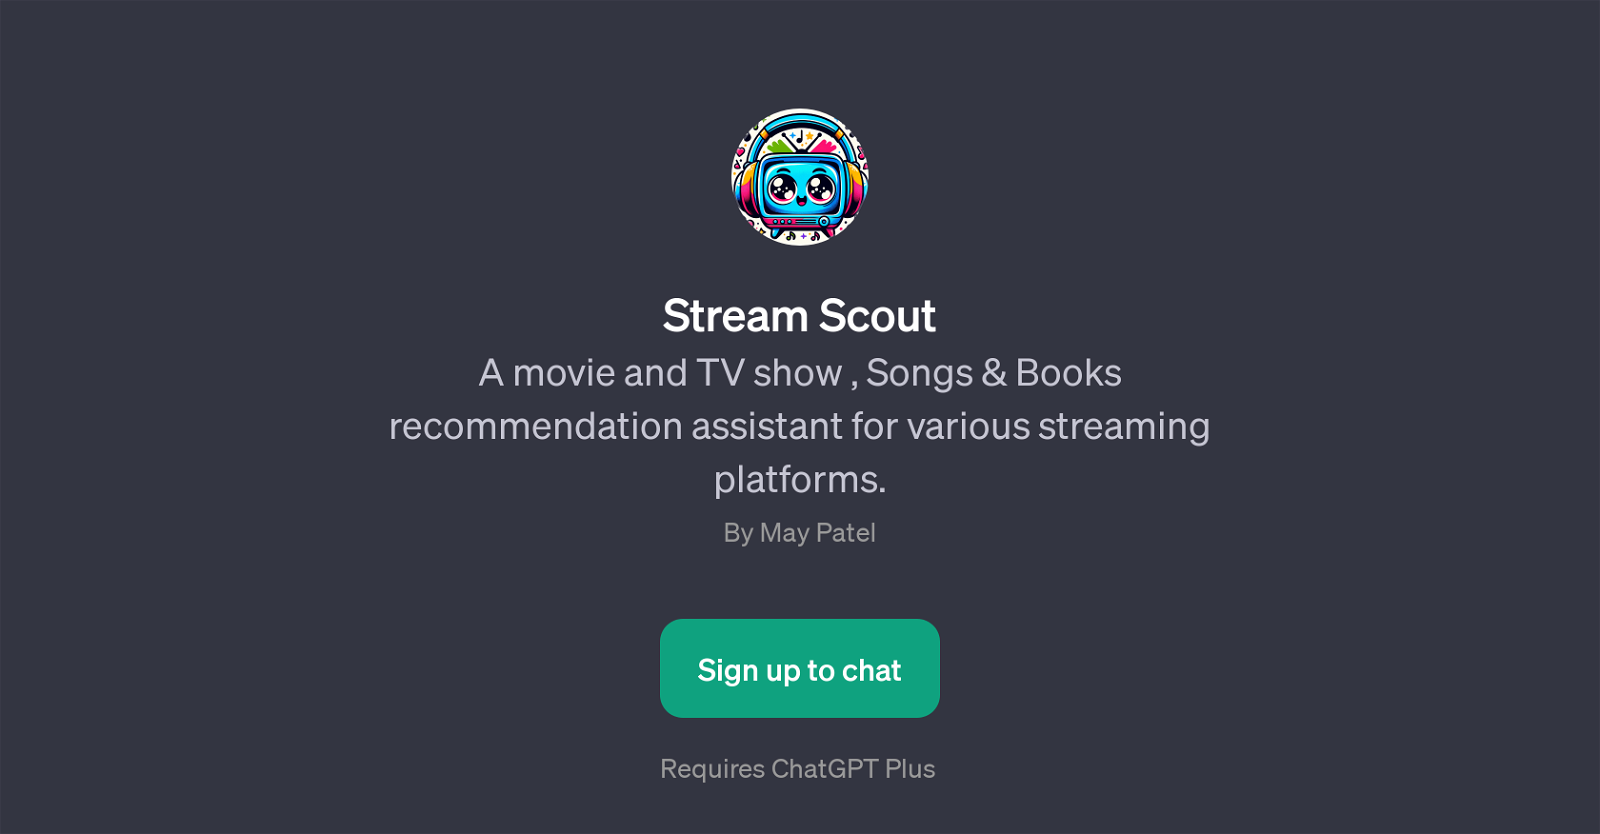 Stream Scout website